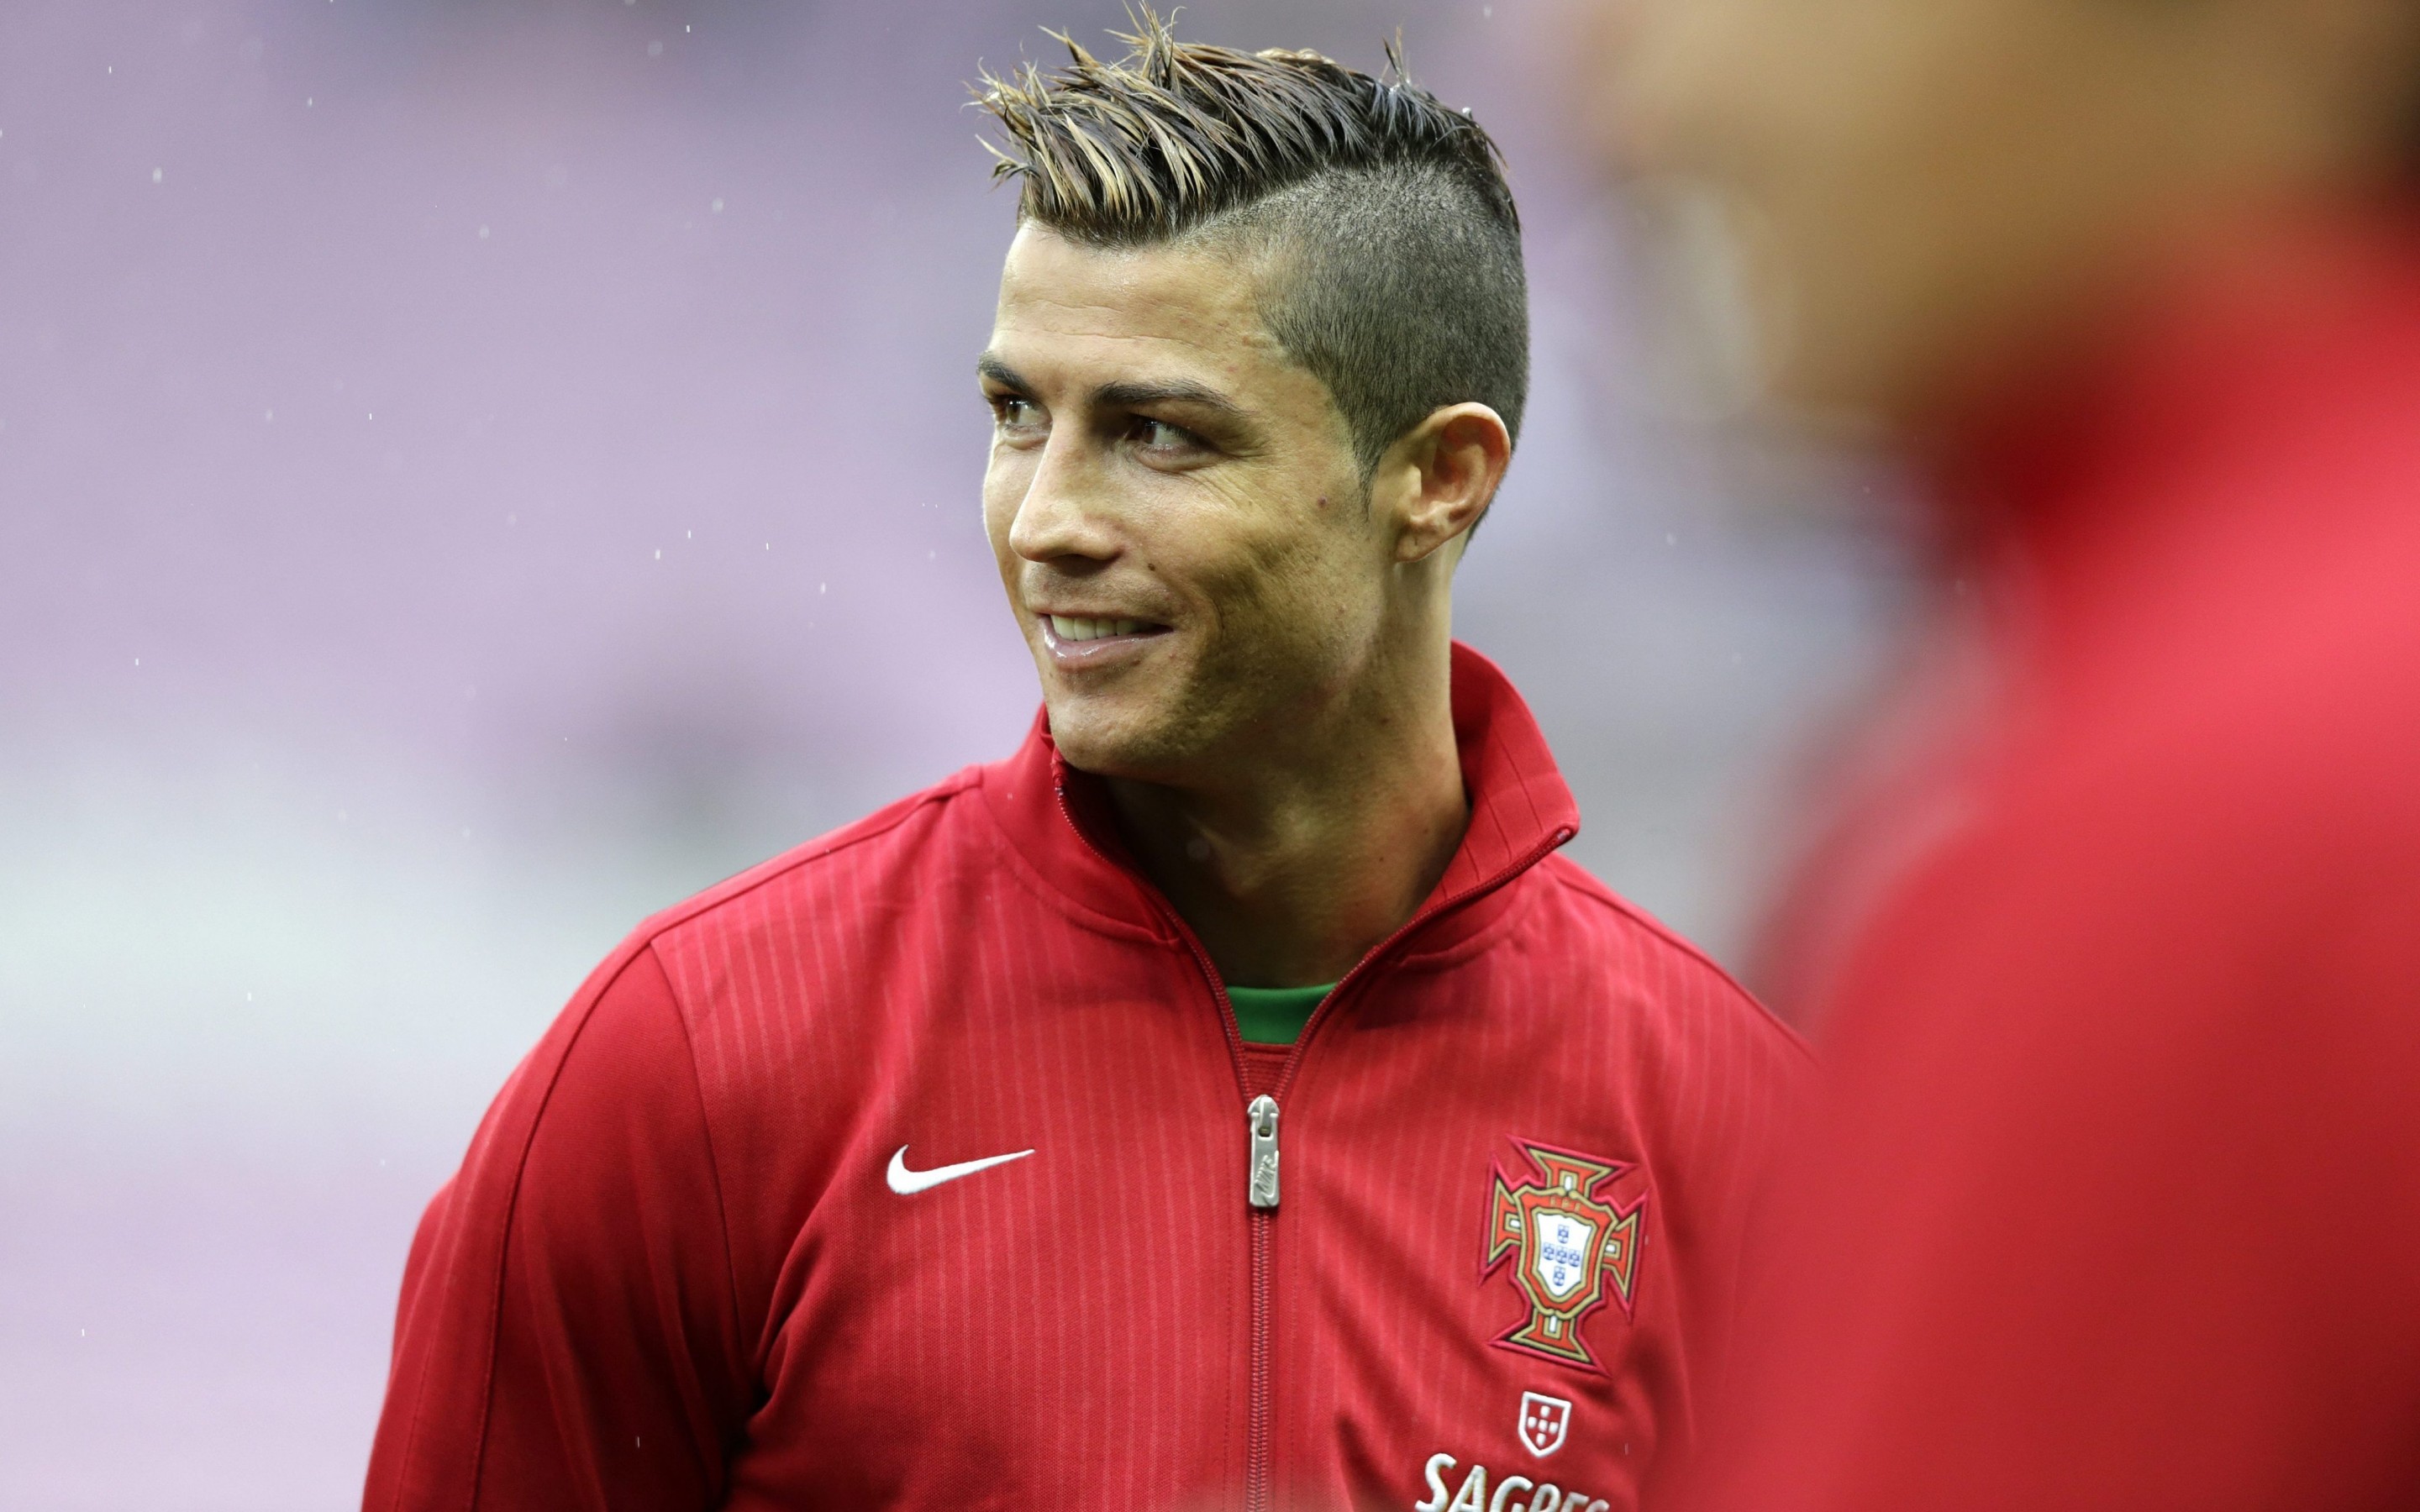 Cristiano Ronaldo Hairstyle image